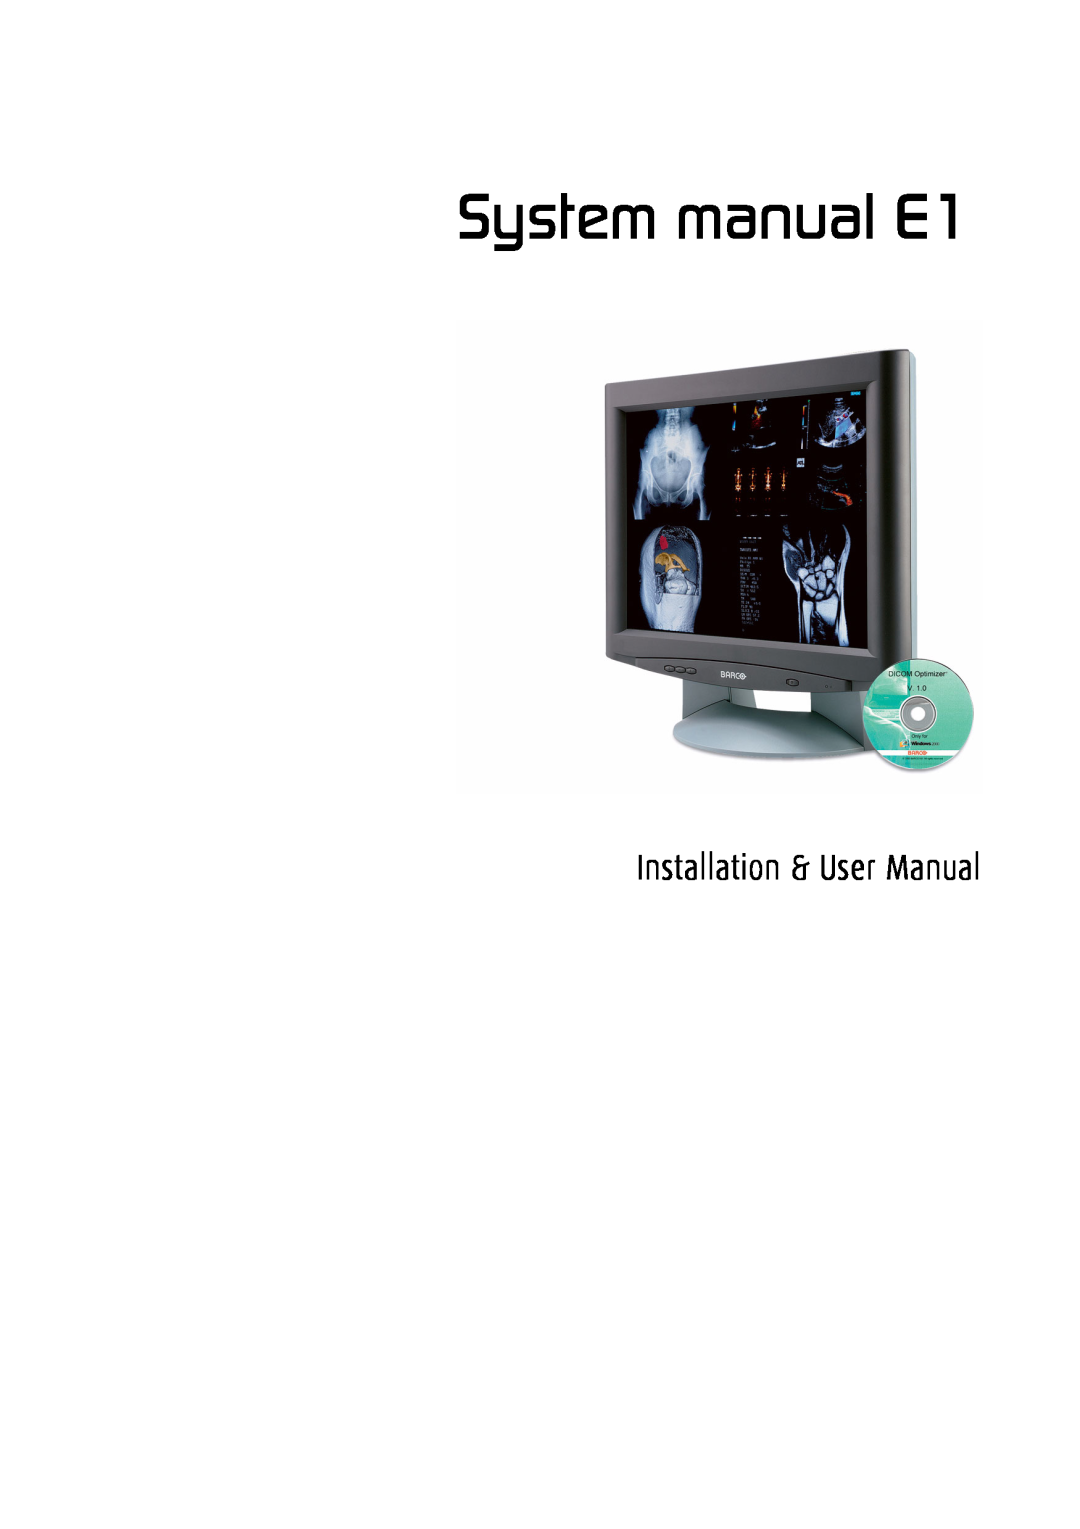 Barco manual Installation & User Manual, System manual E1 